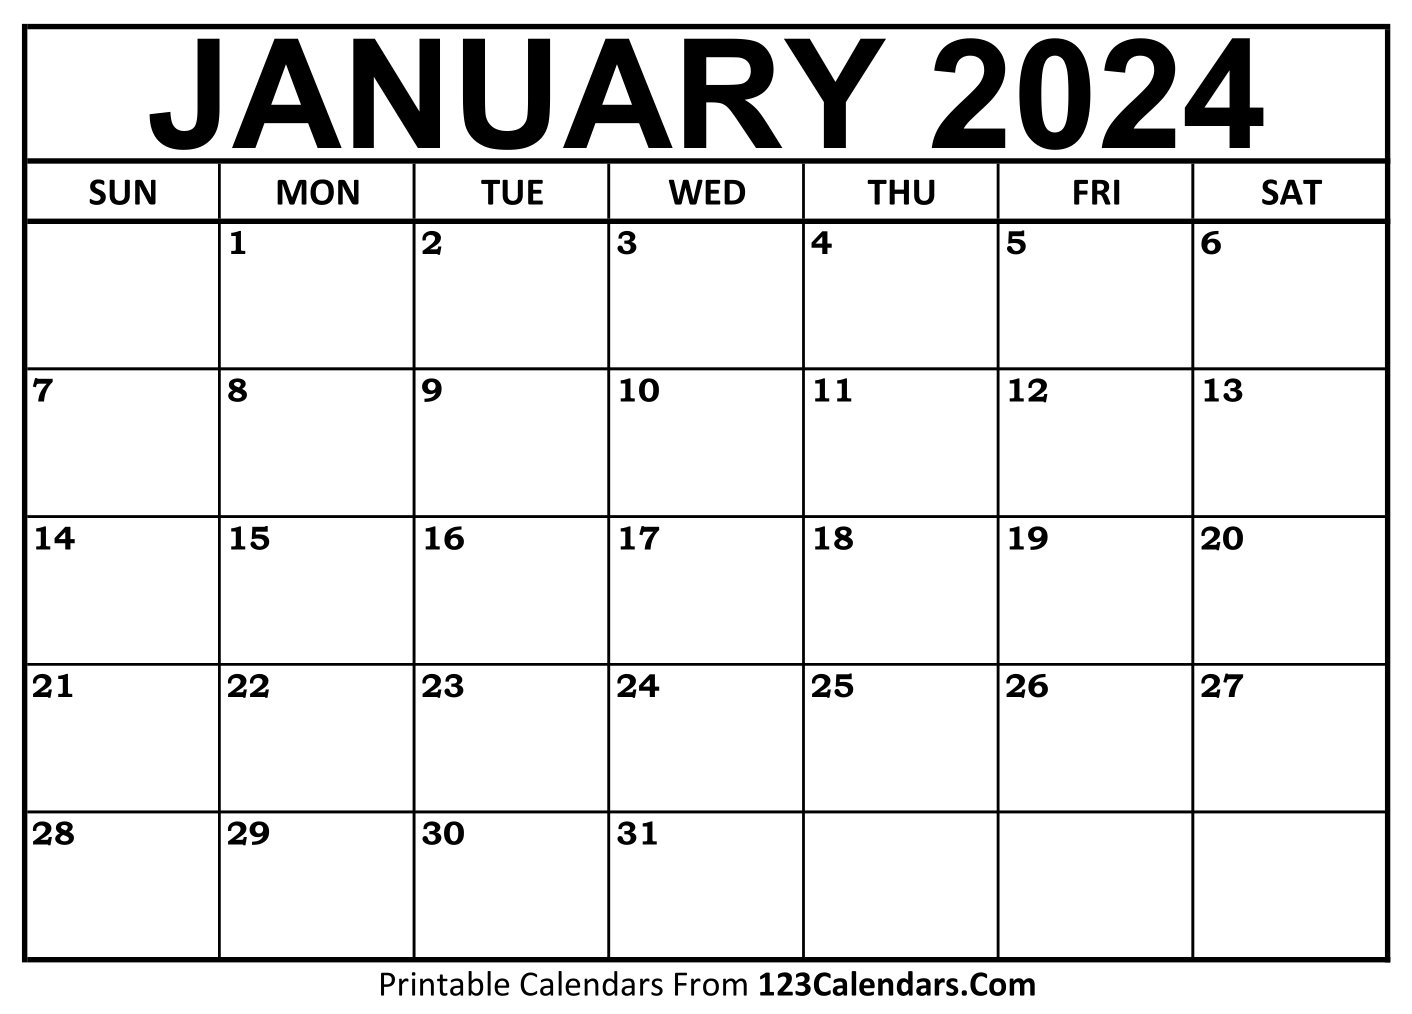 Printable January 2024 Calendar Templates - 123Calendars | Printable January 2024